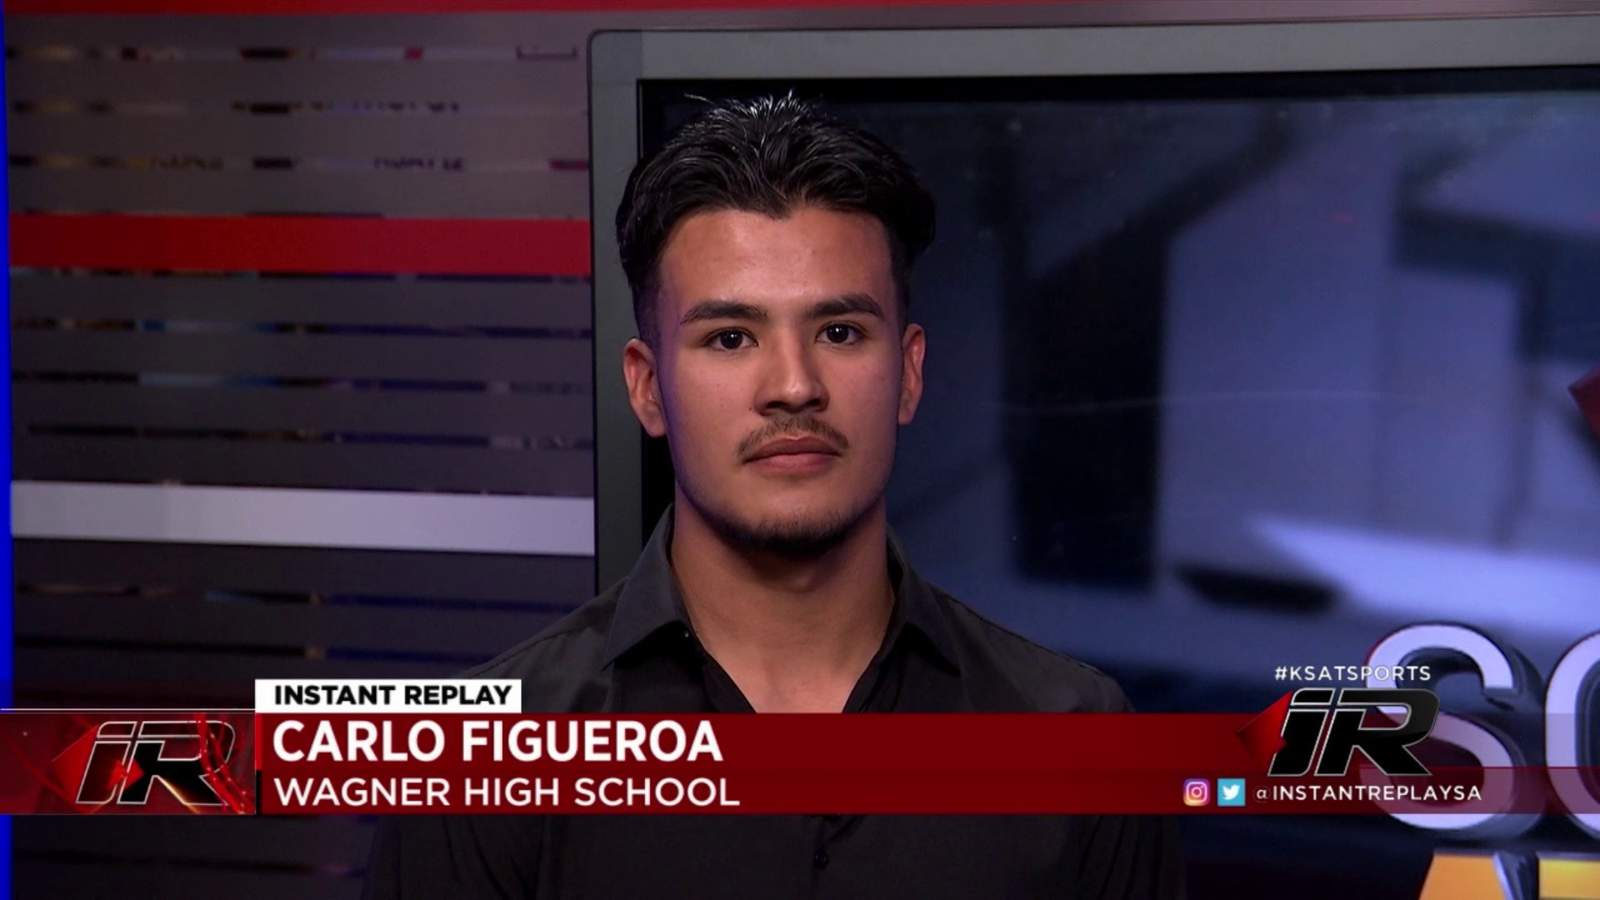 Scholar Athlete: Carlo Figueroa, Wagner High School